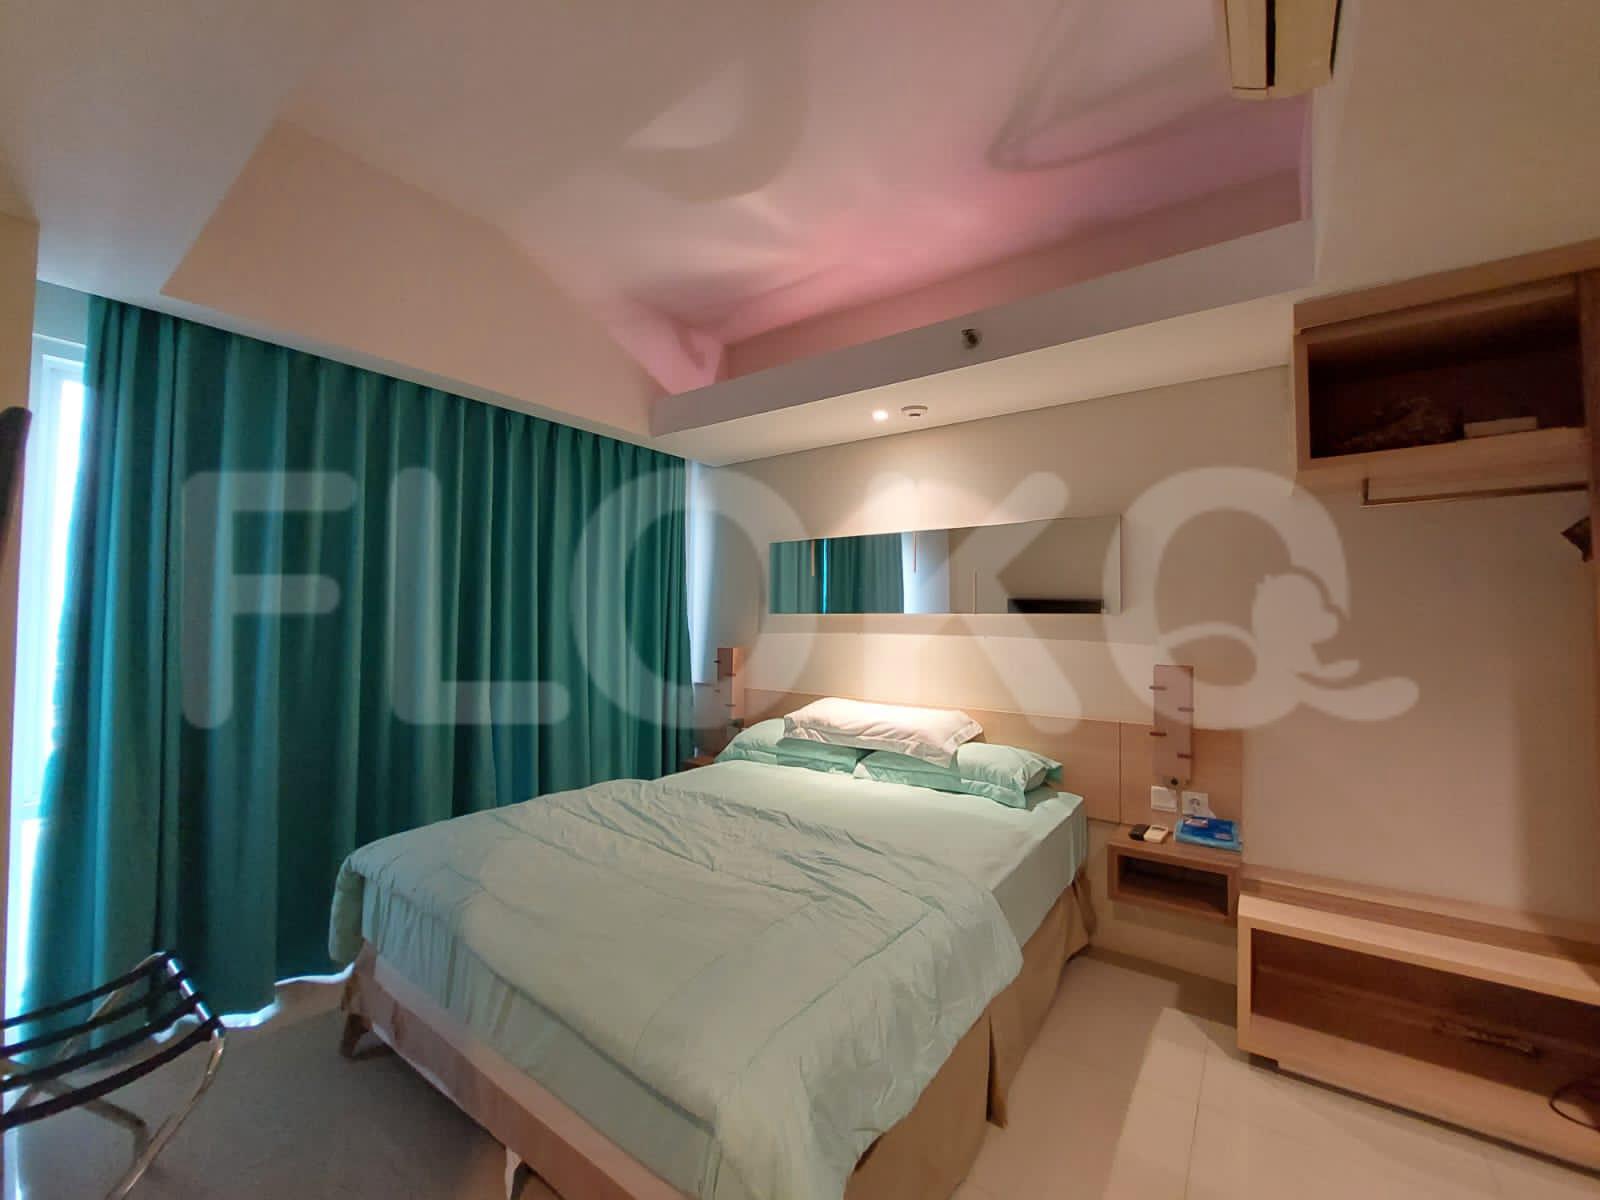 2 Bedroom on 9th Floor fbo460 for Rent in Bogor Icon